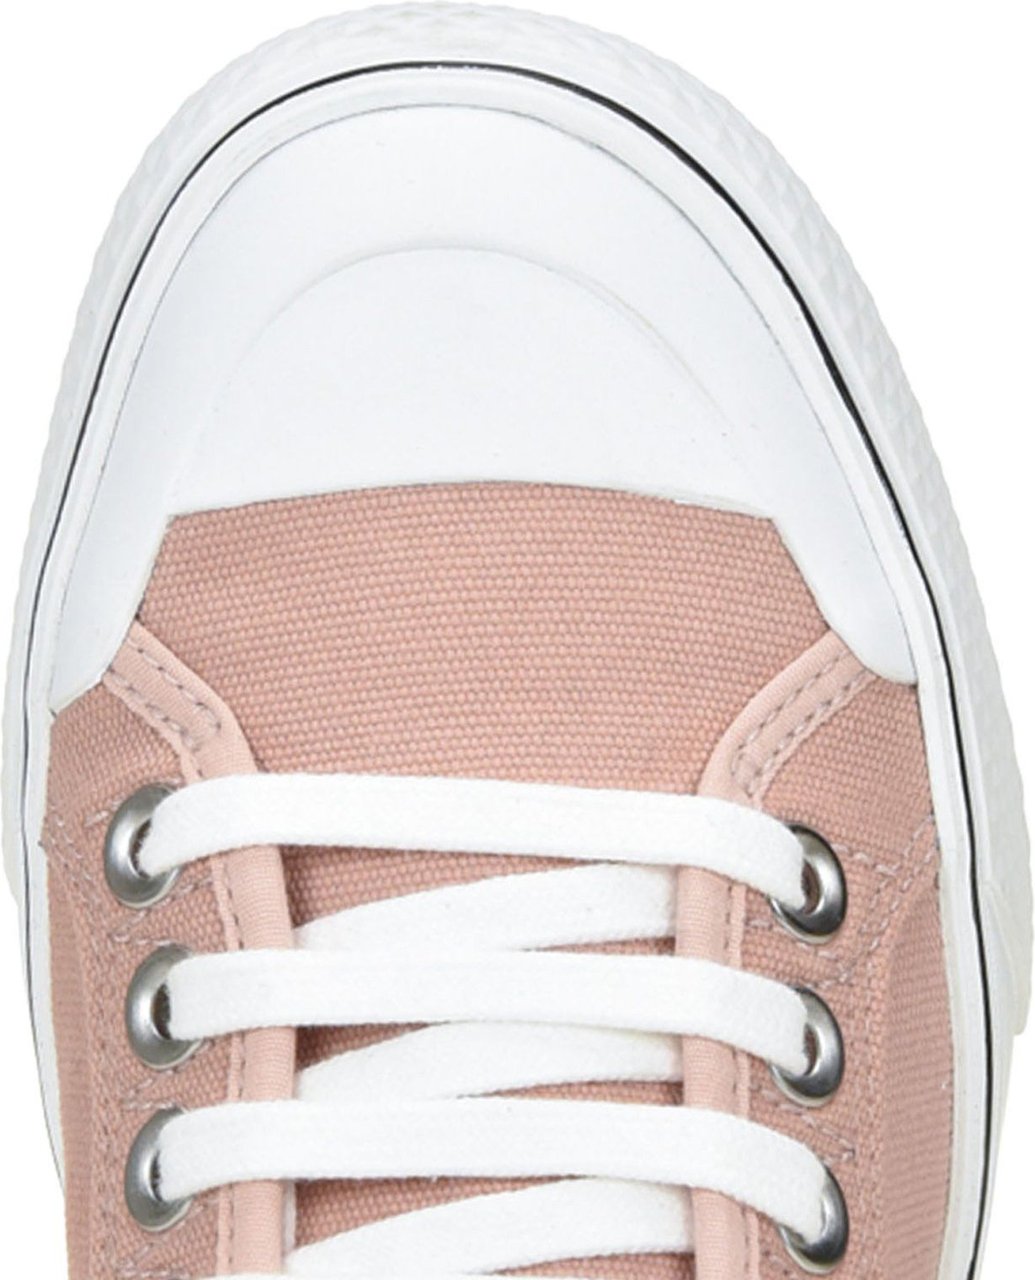 Stella McCartney High Top Canvas Sneakers Pink